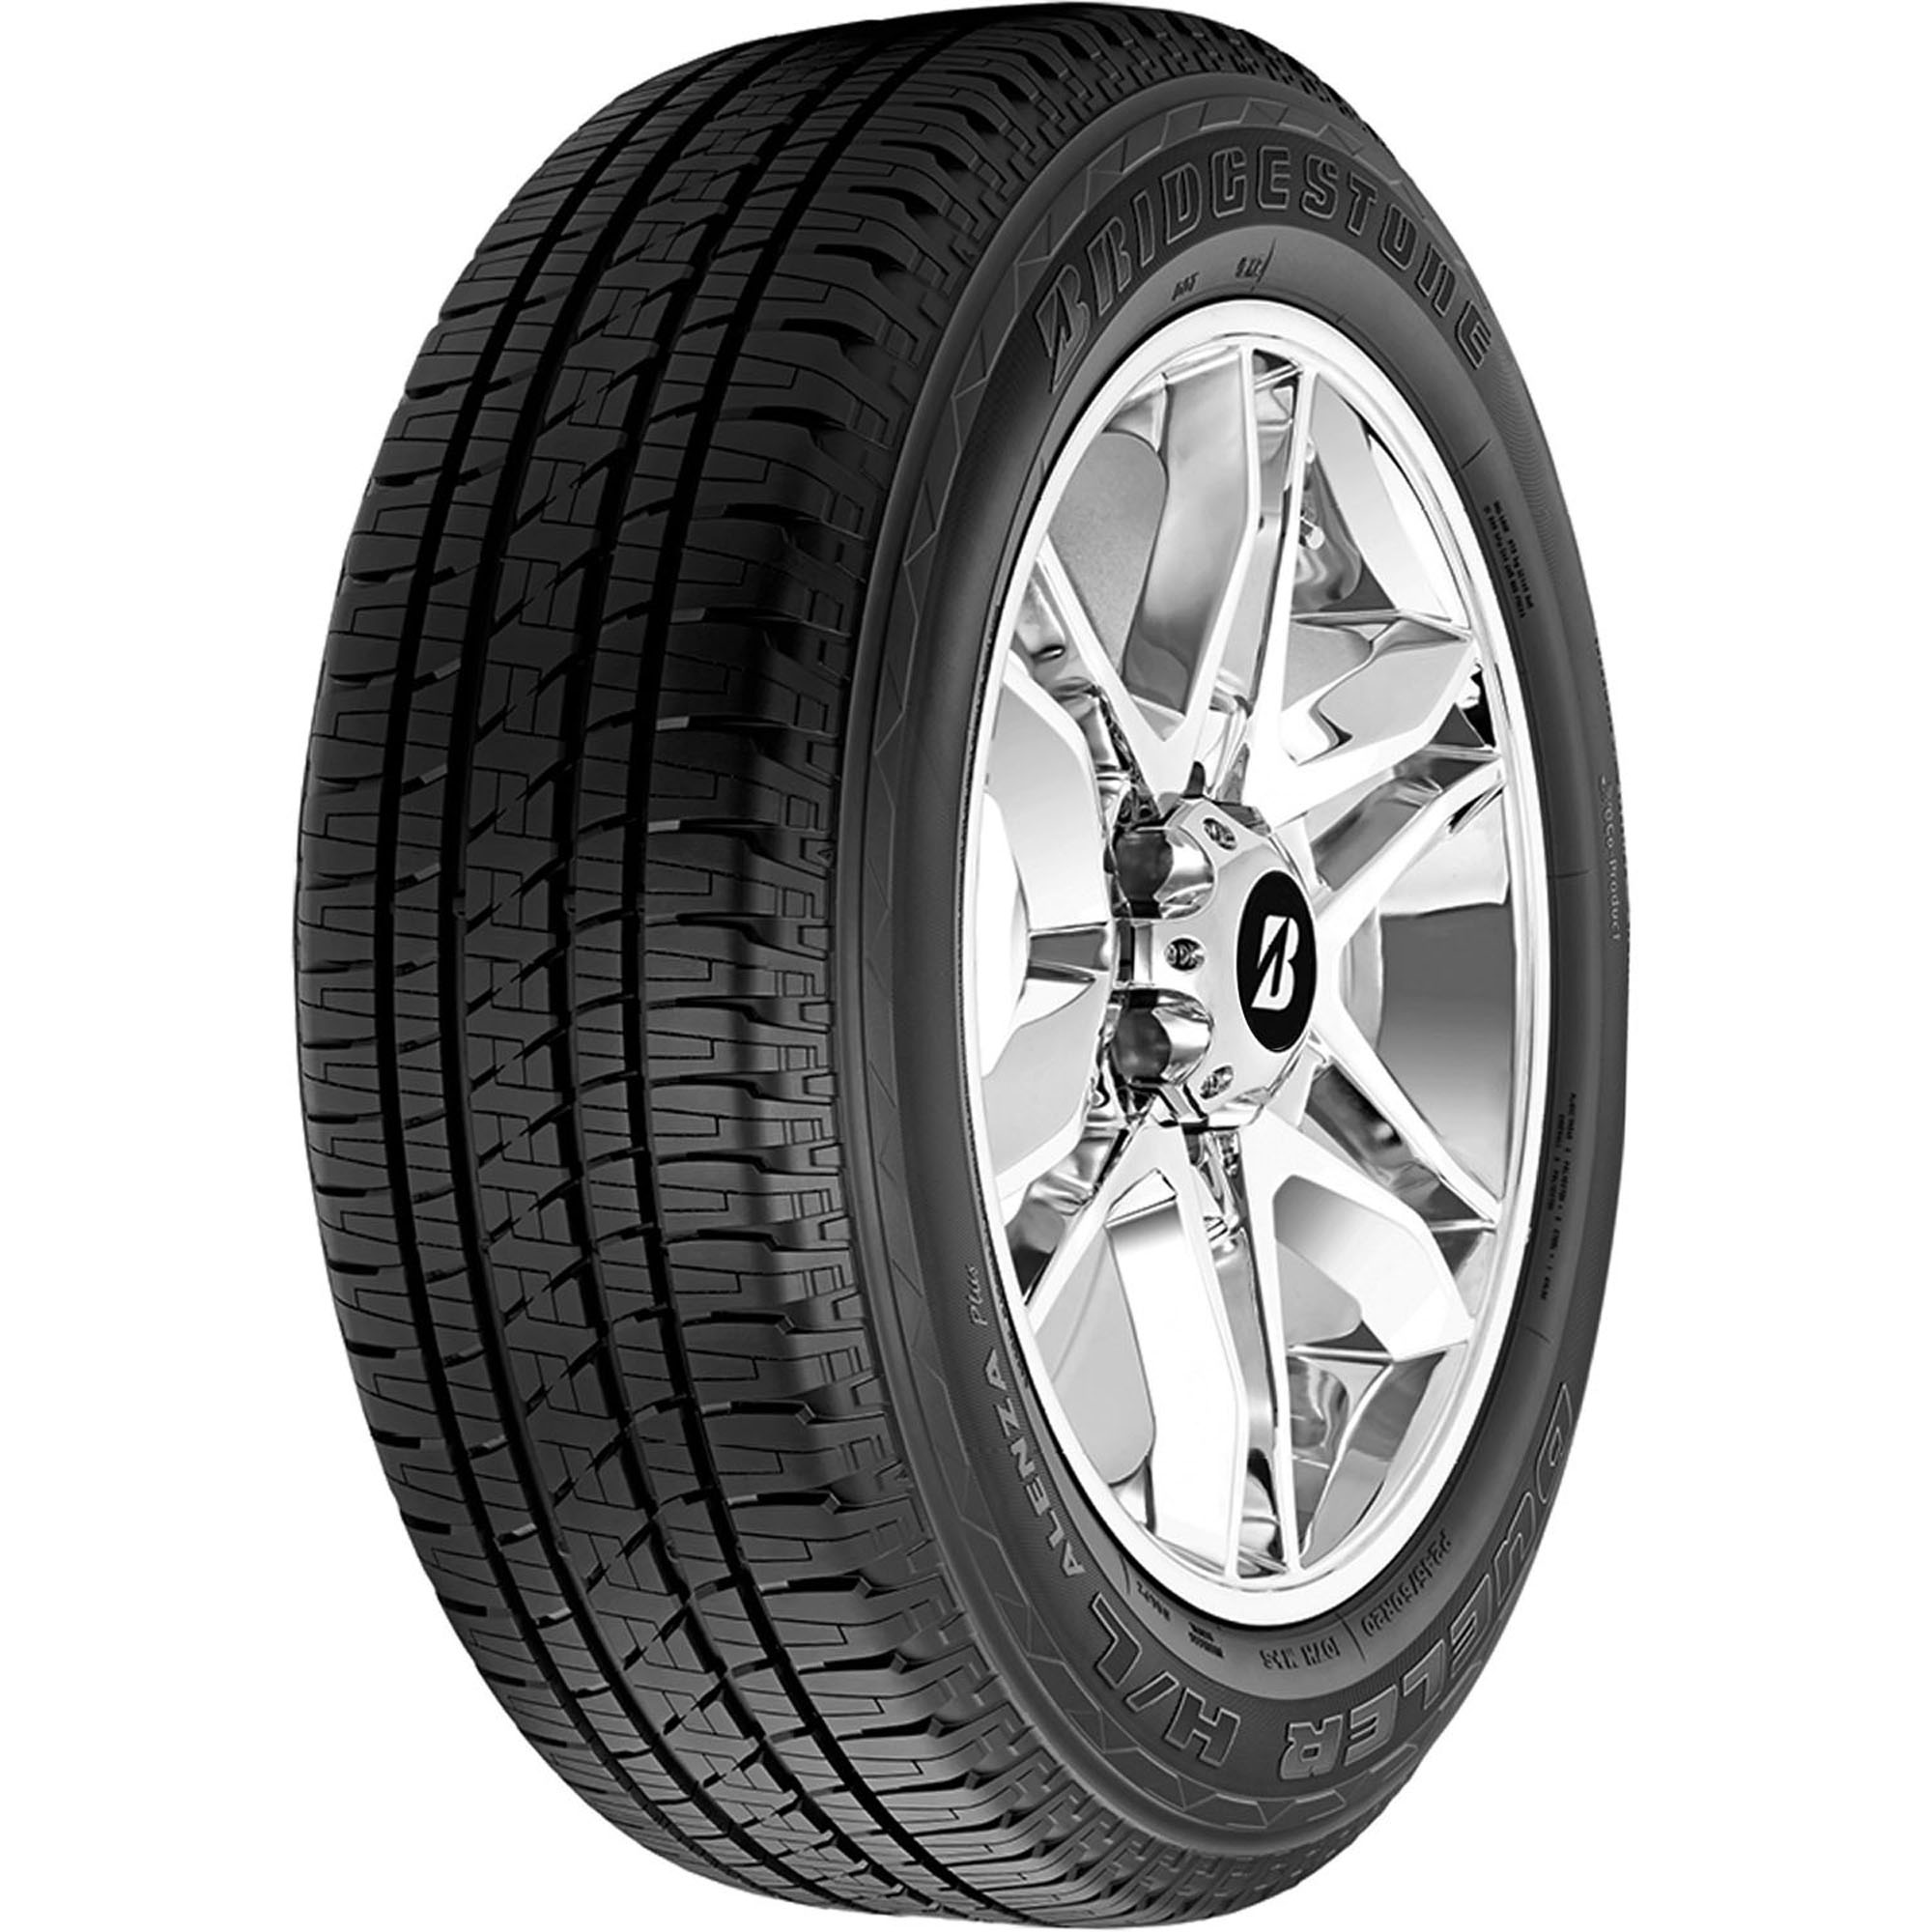 Bridgestone Dueler H/L Alenza Plus All Season P275/55R20 111H SUV/Crossover Tire - image 1 of 6